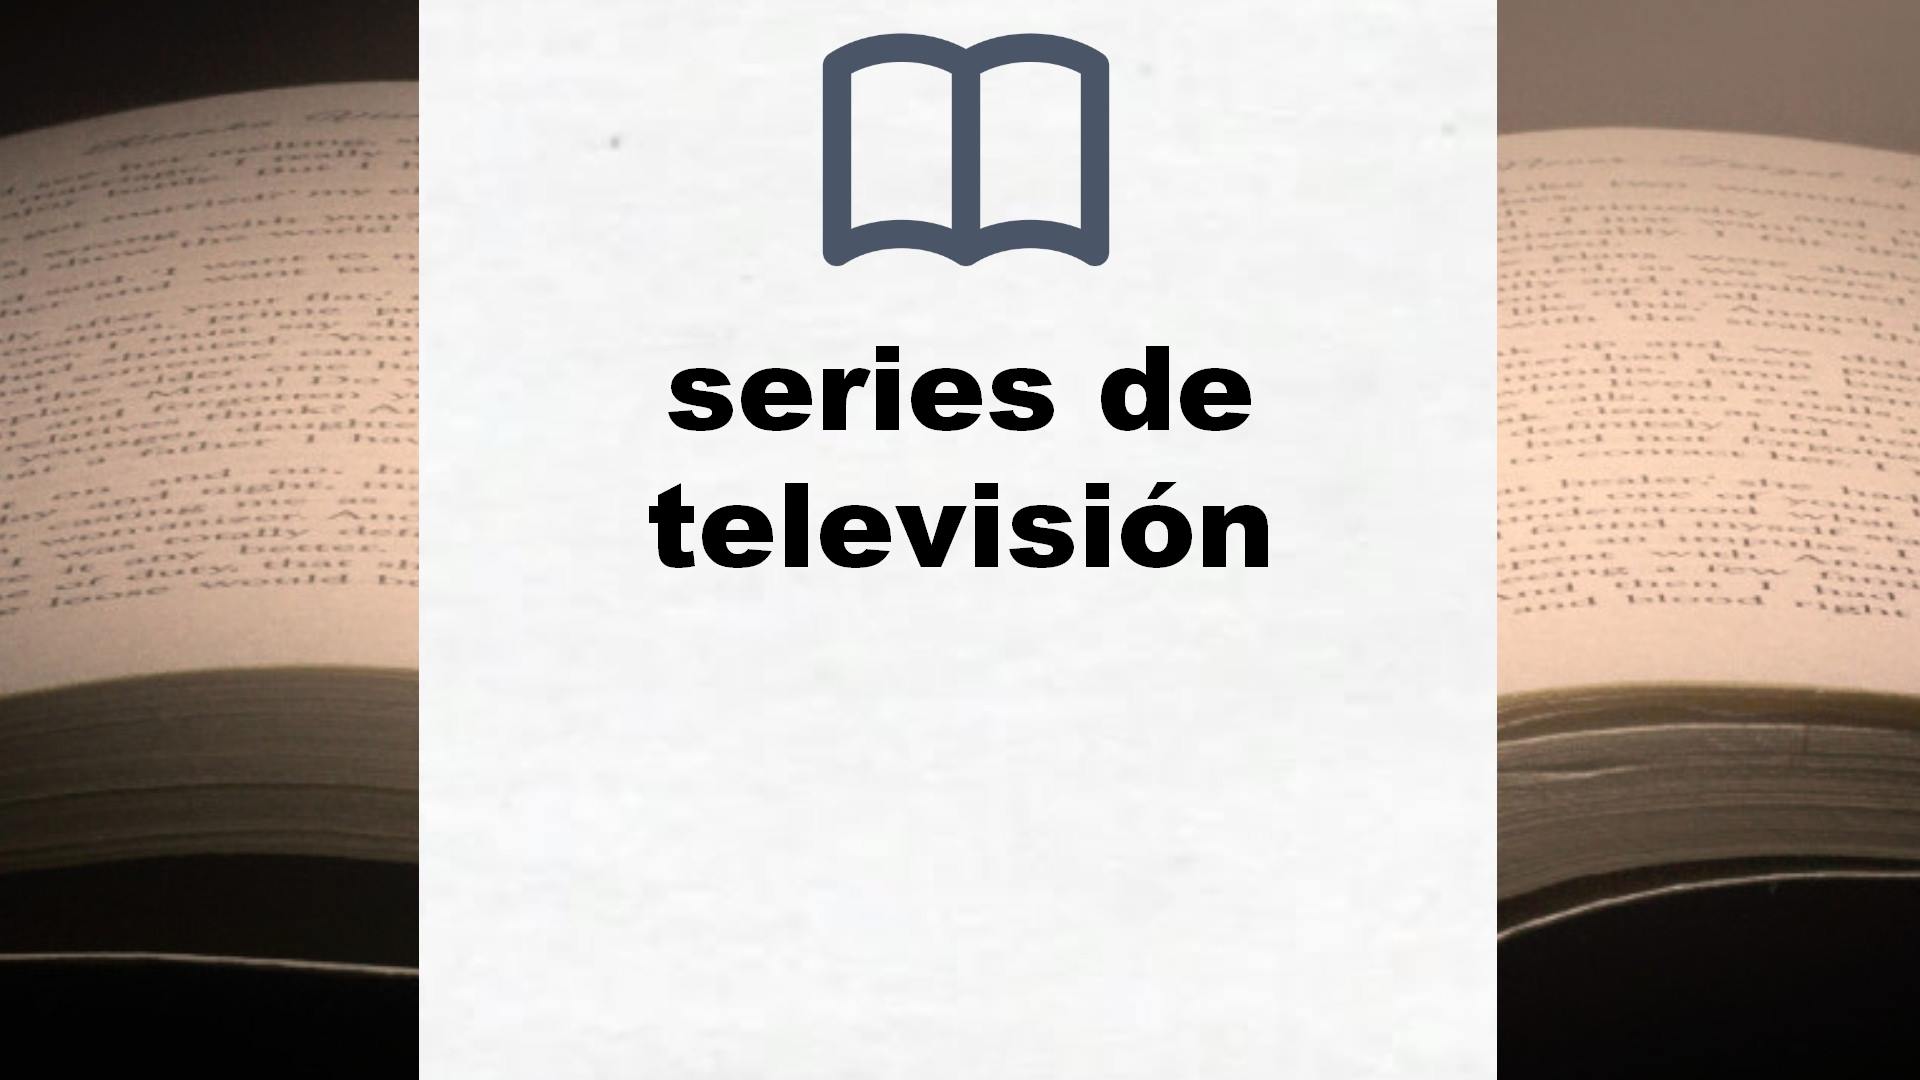 Libros sobre series de televisión